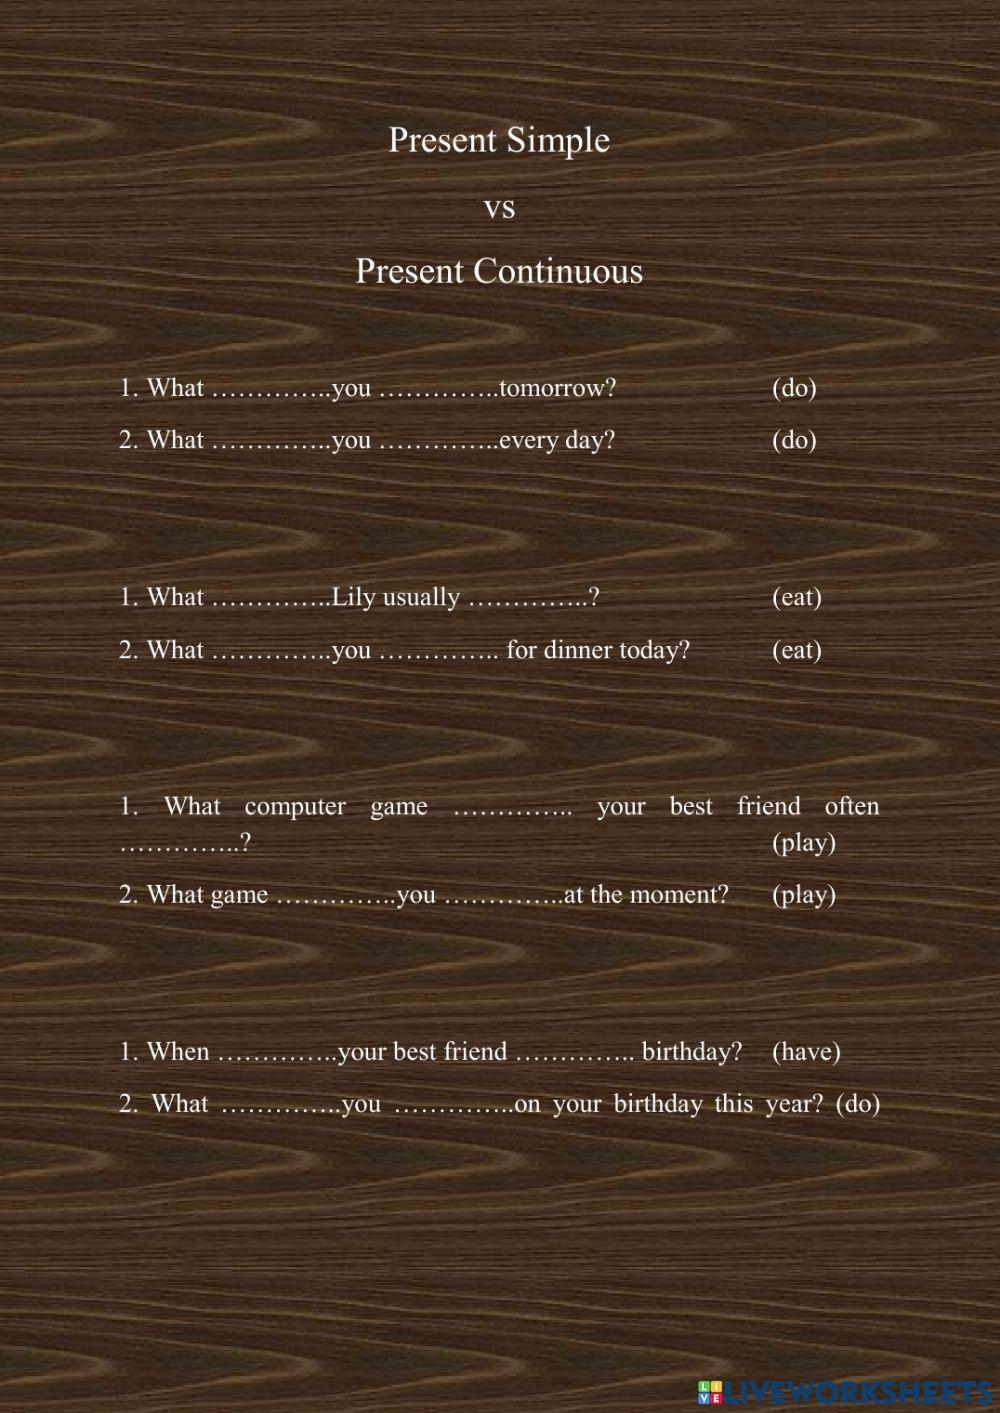 Present simple vs present continuous